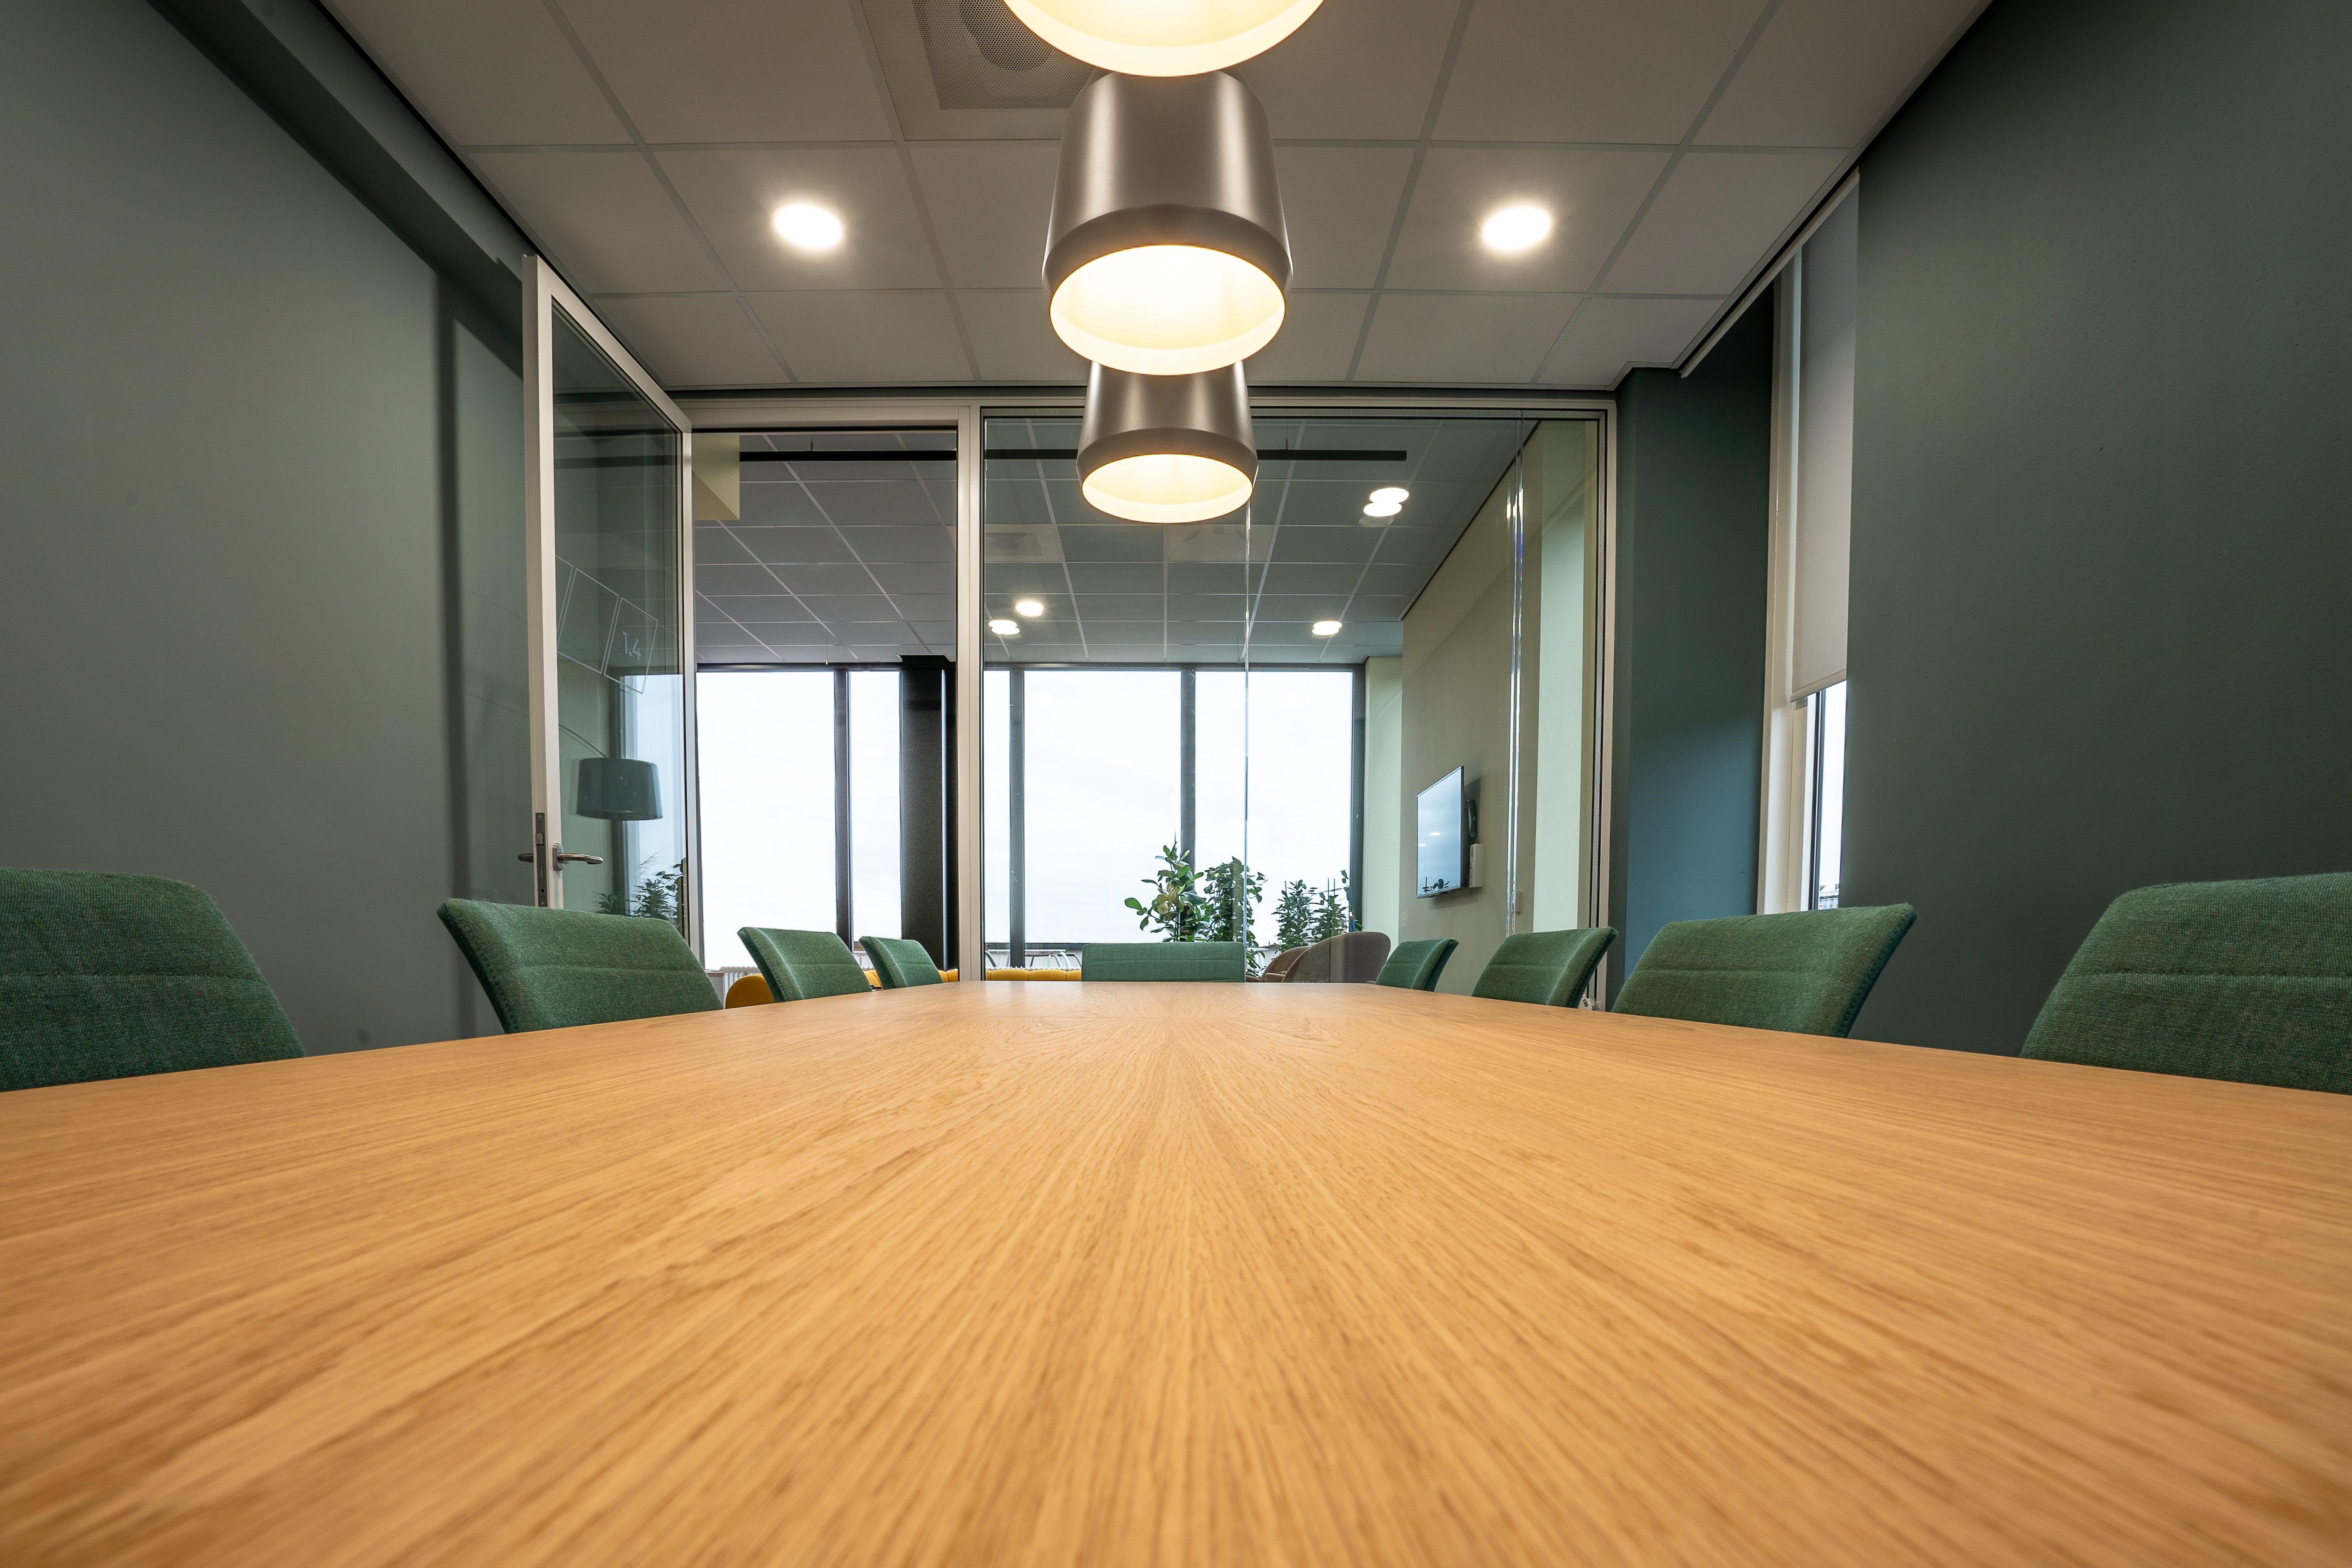 merancang ruang meeting - cs laminates - interior design